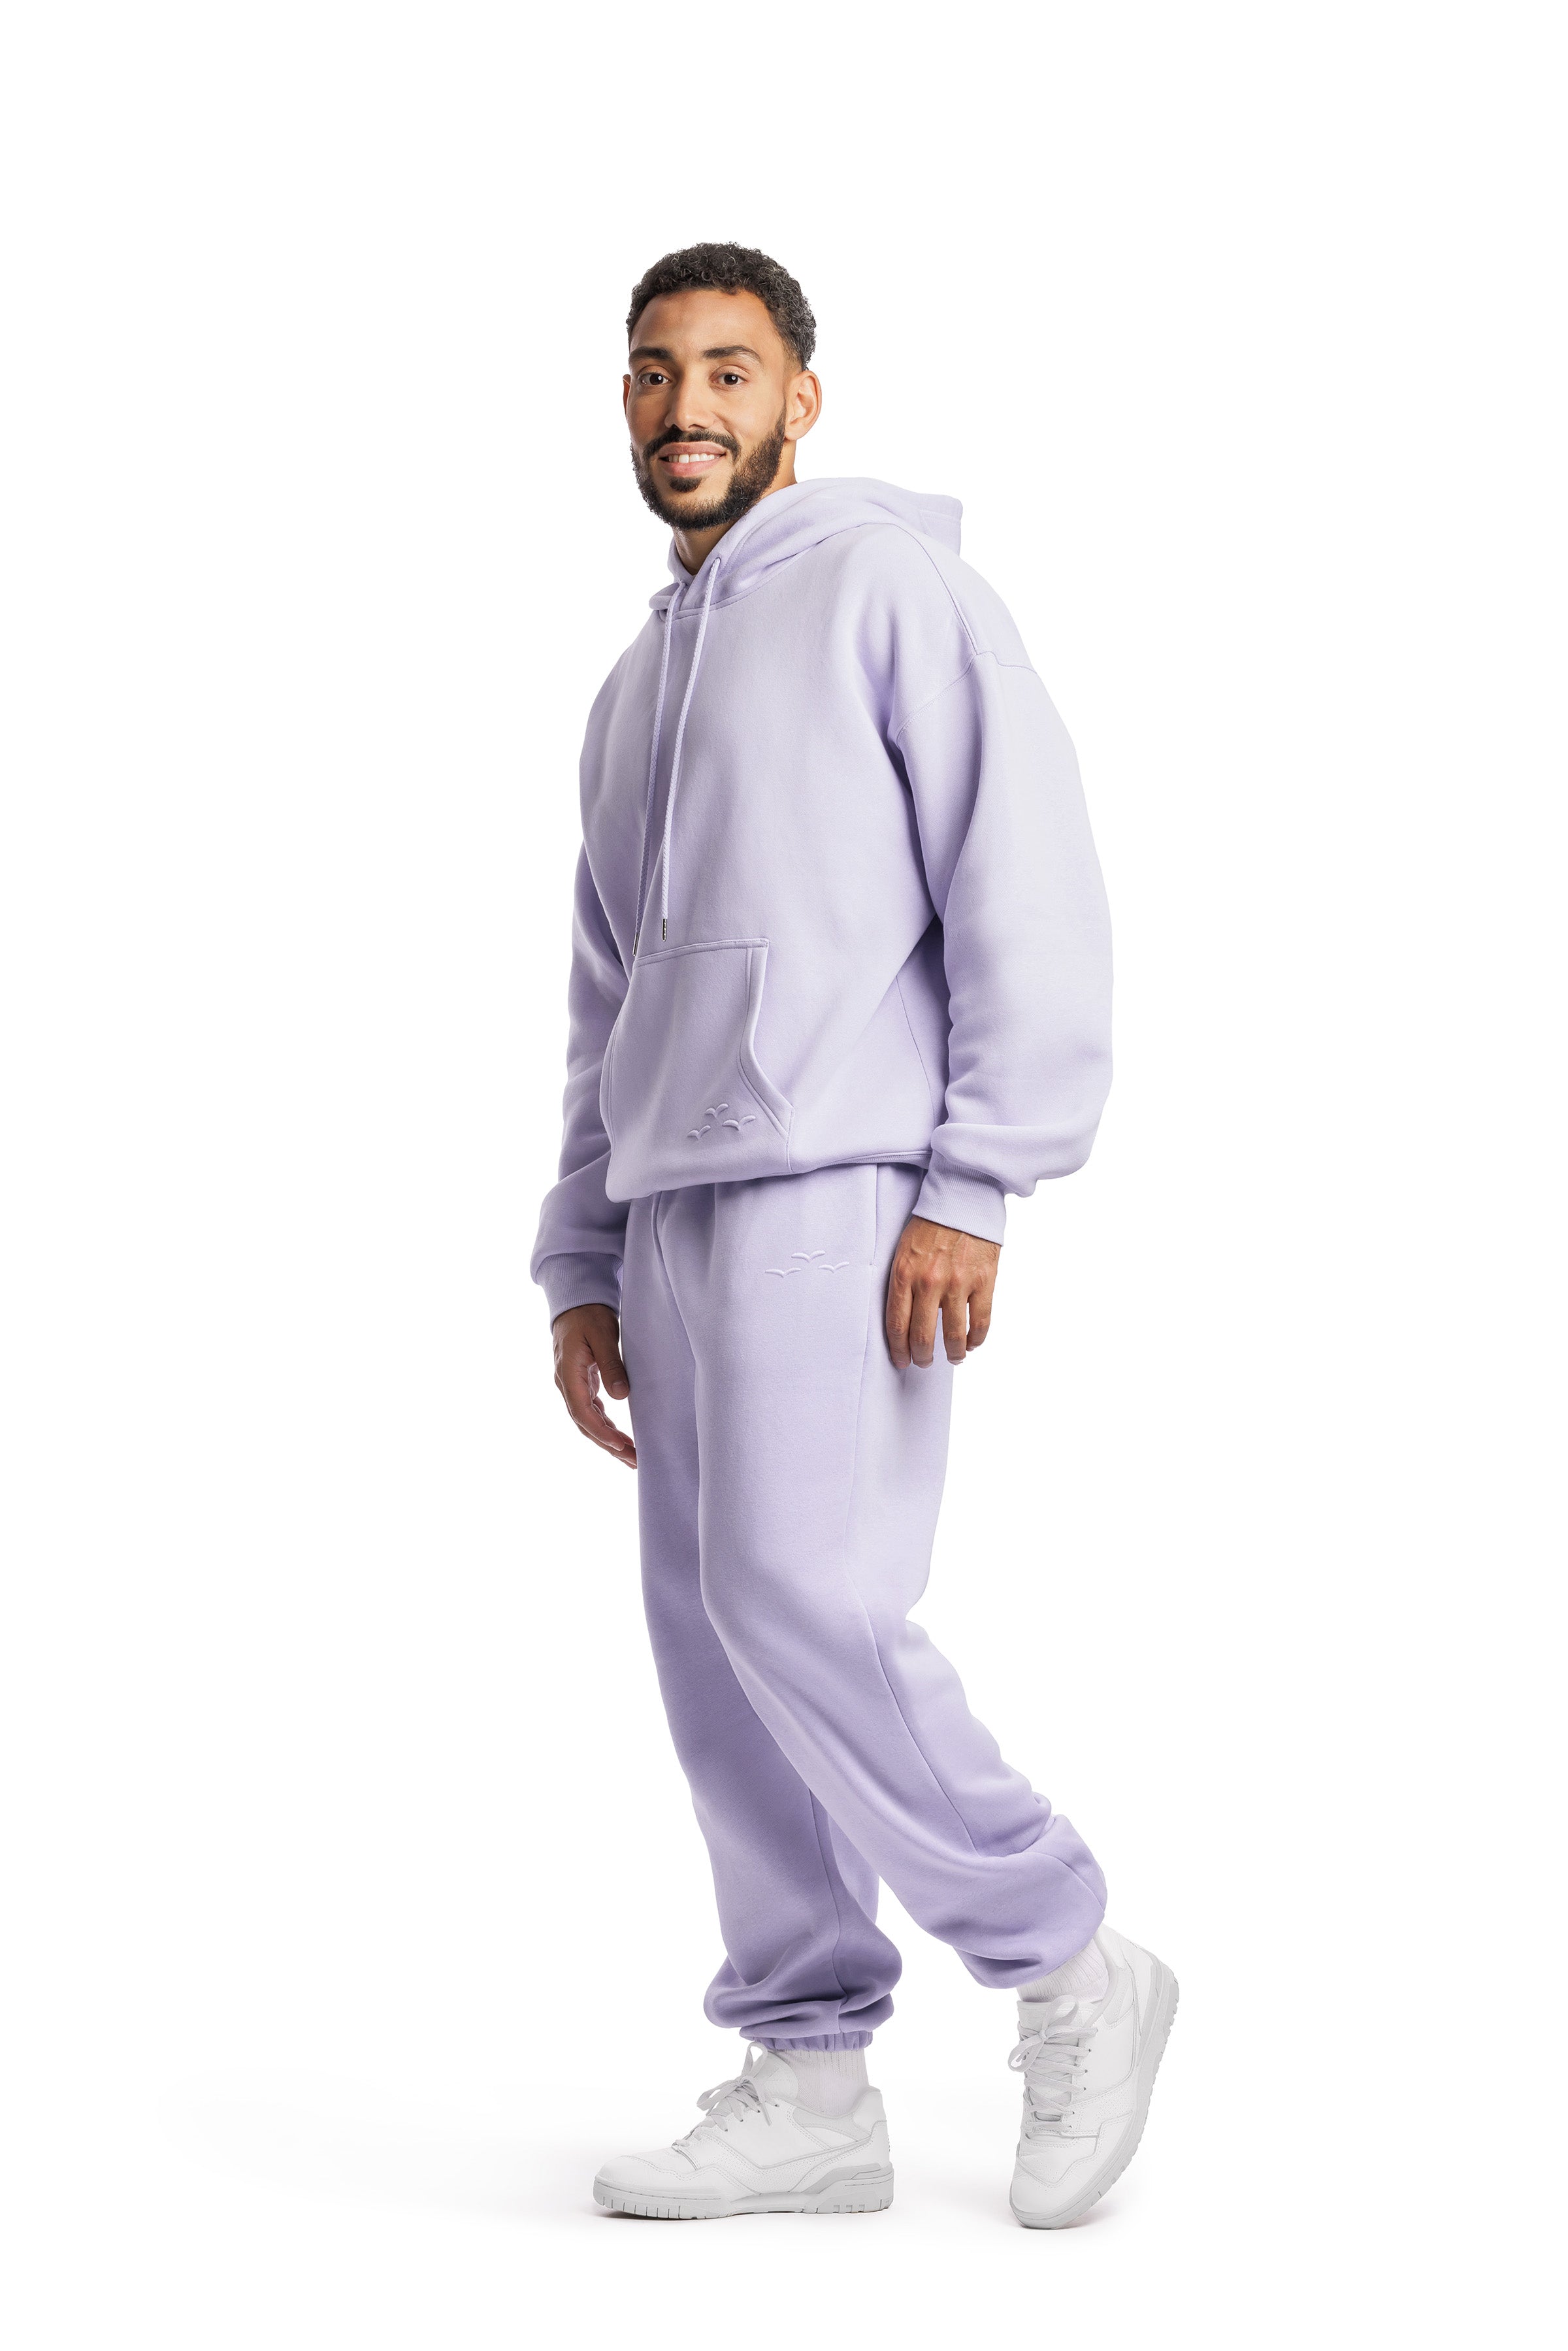 Men's sweatsuit set in lavender